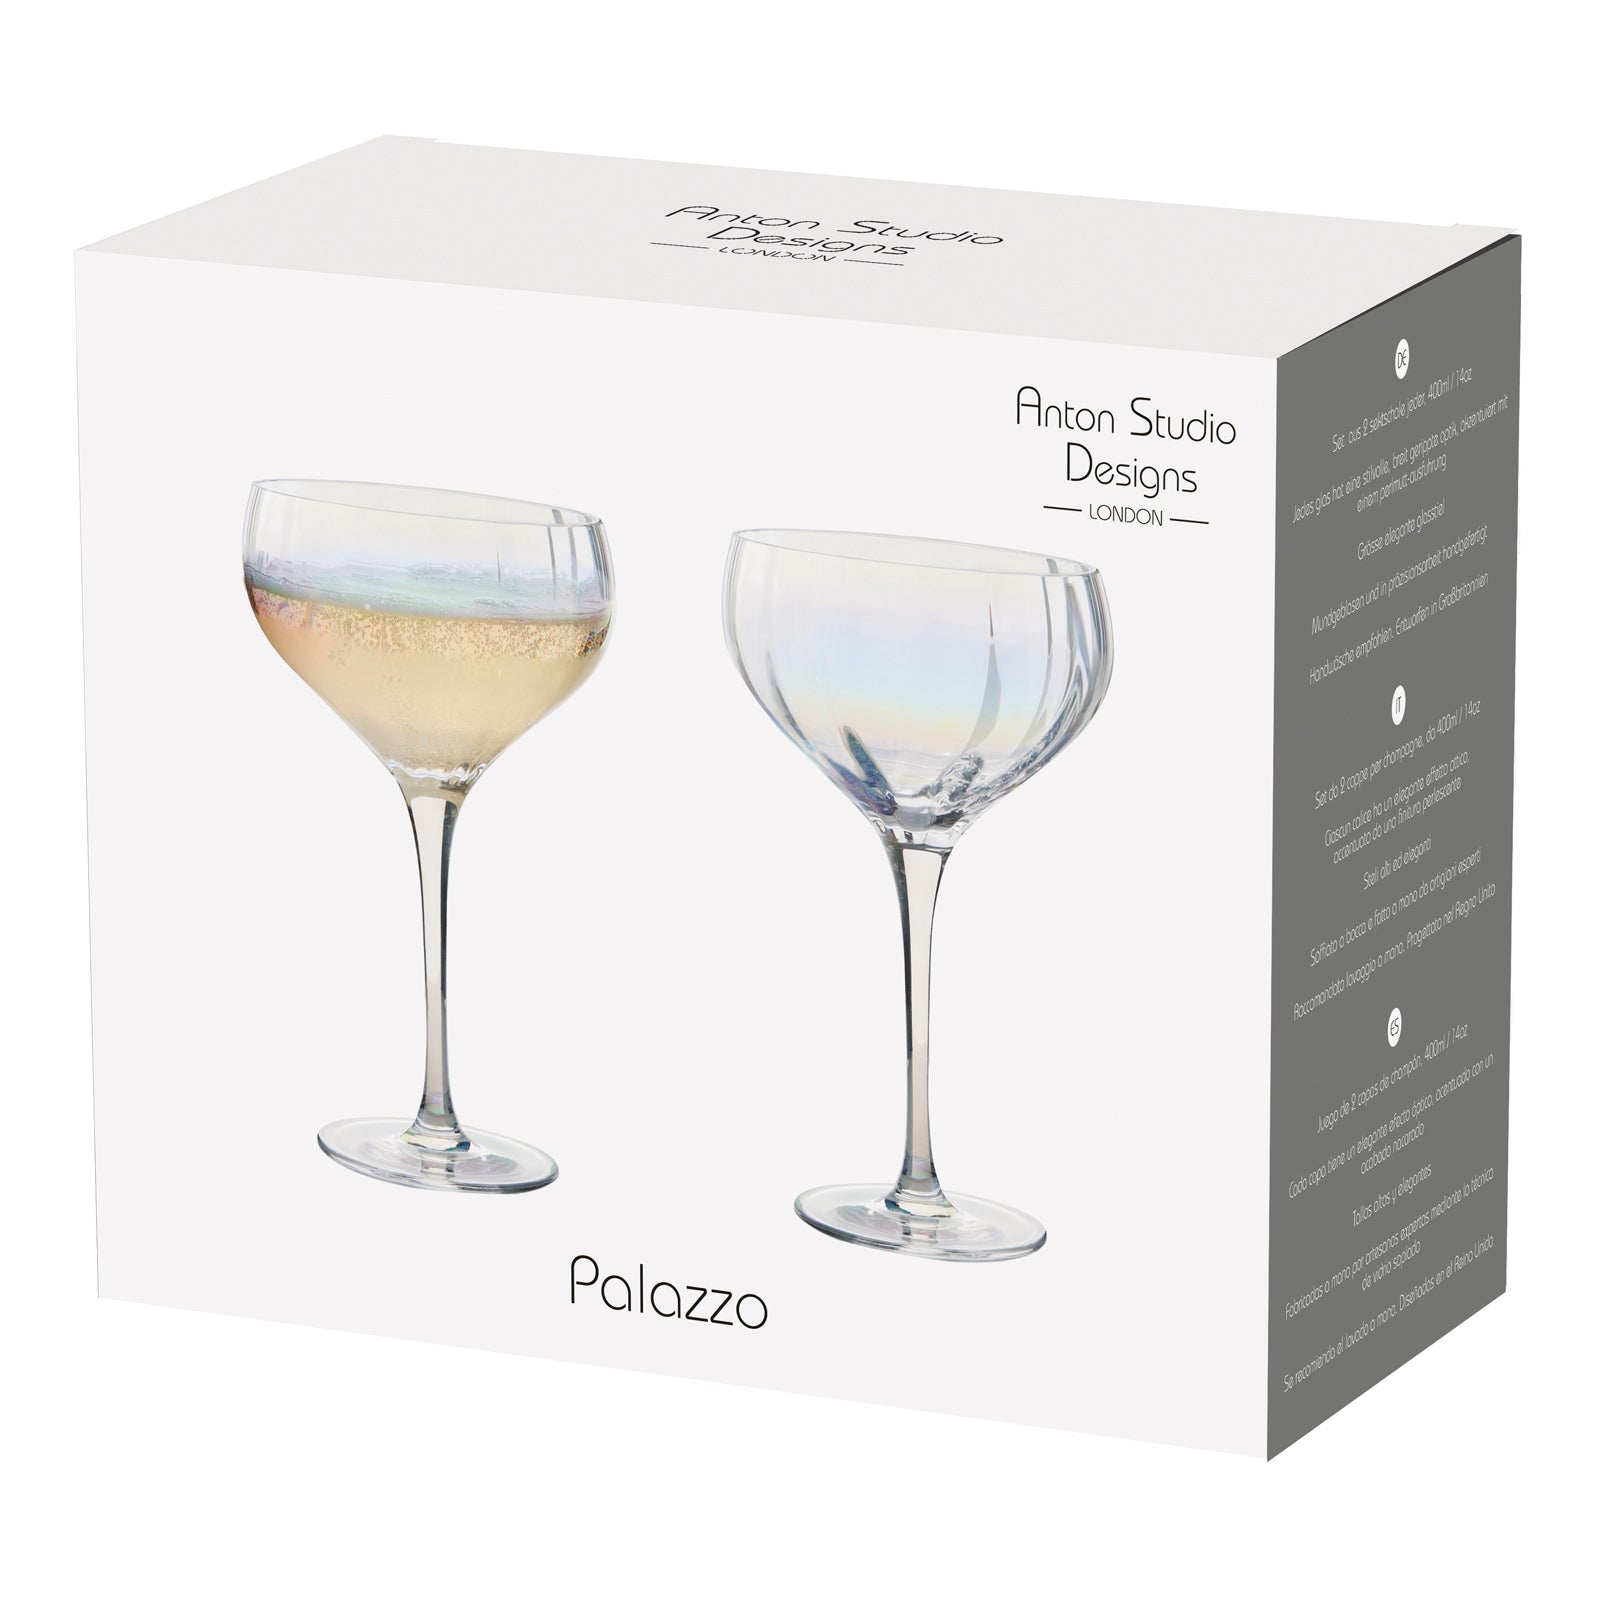 Anton Studio Designs Palazzo Champagne Saucers, Set of 2